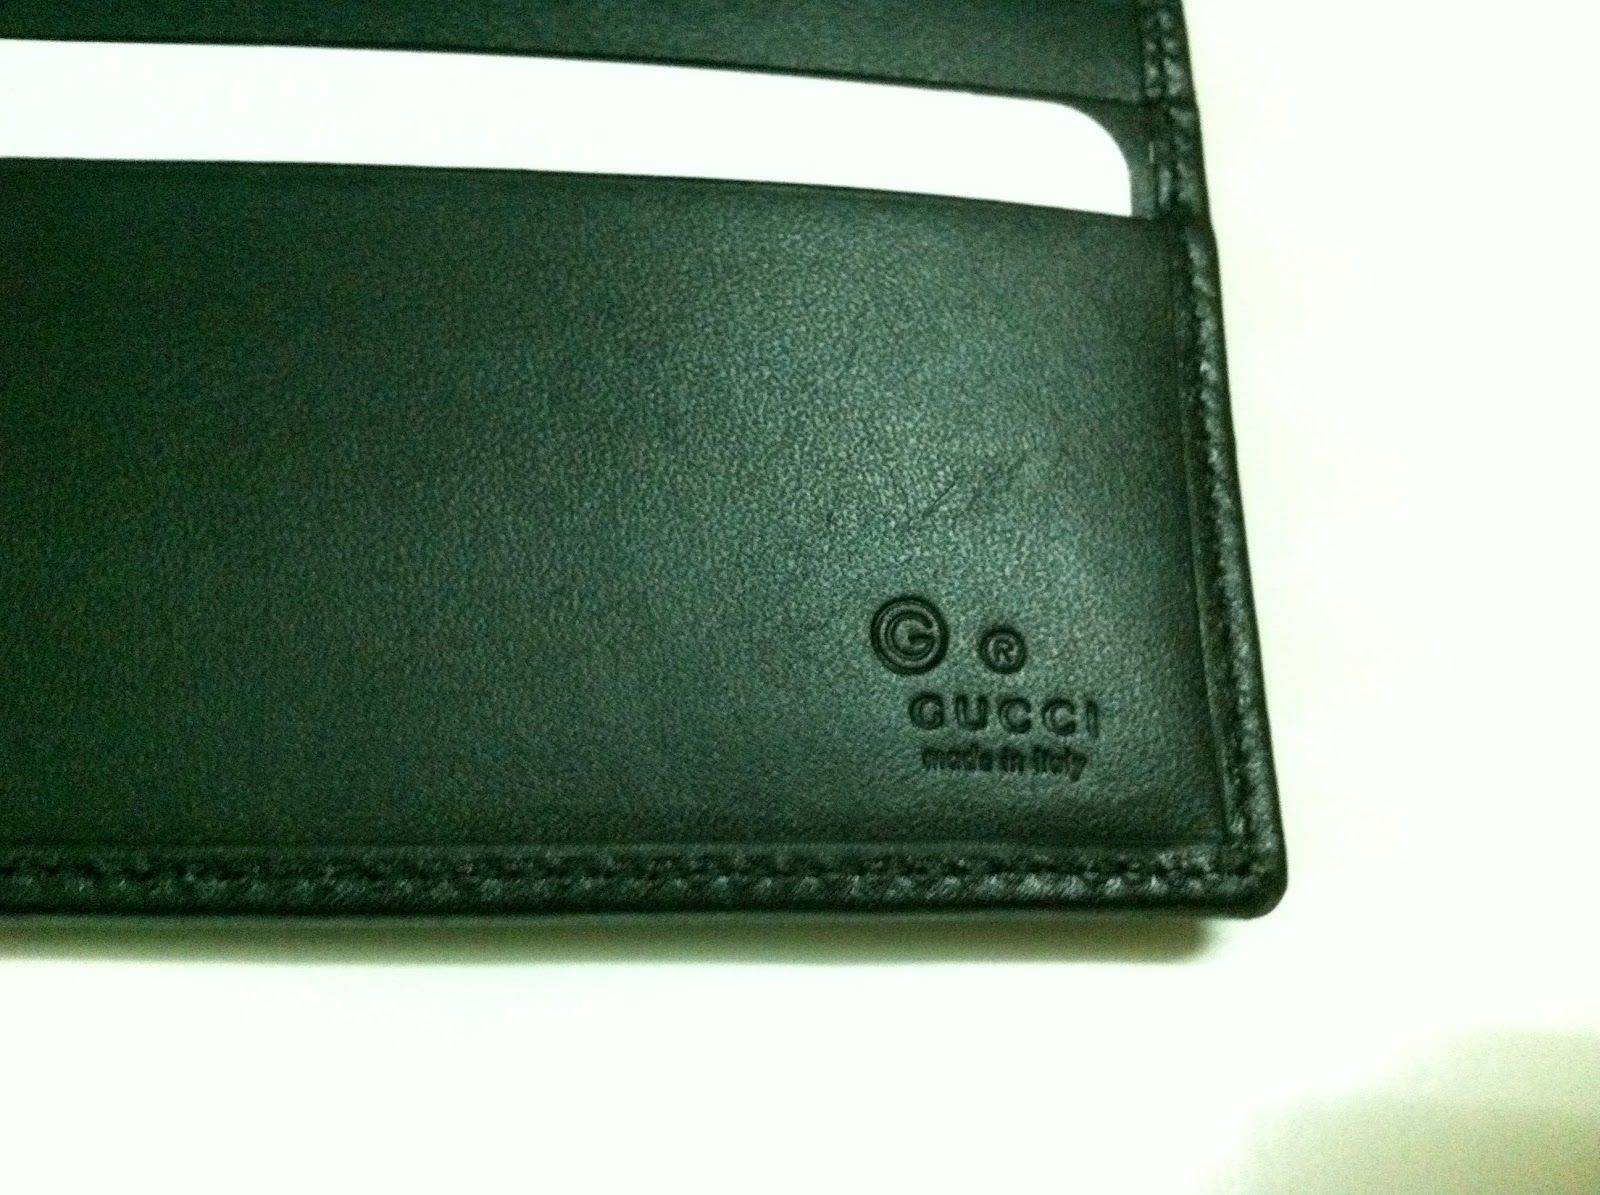 Real Gucci Label http://everydayluxurybag.blogspot.com/2012/05/gucci ...